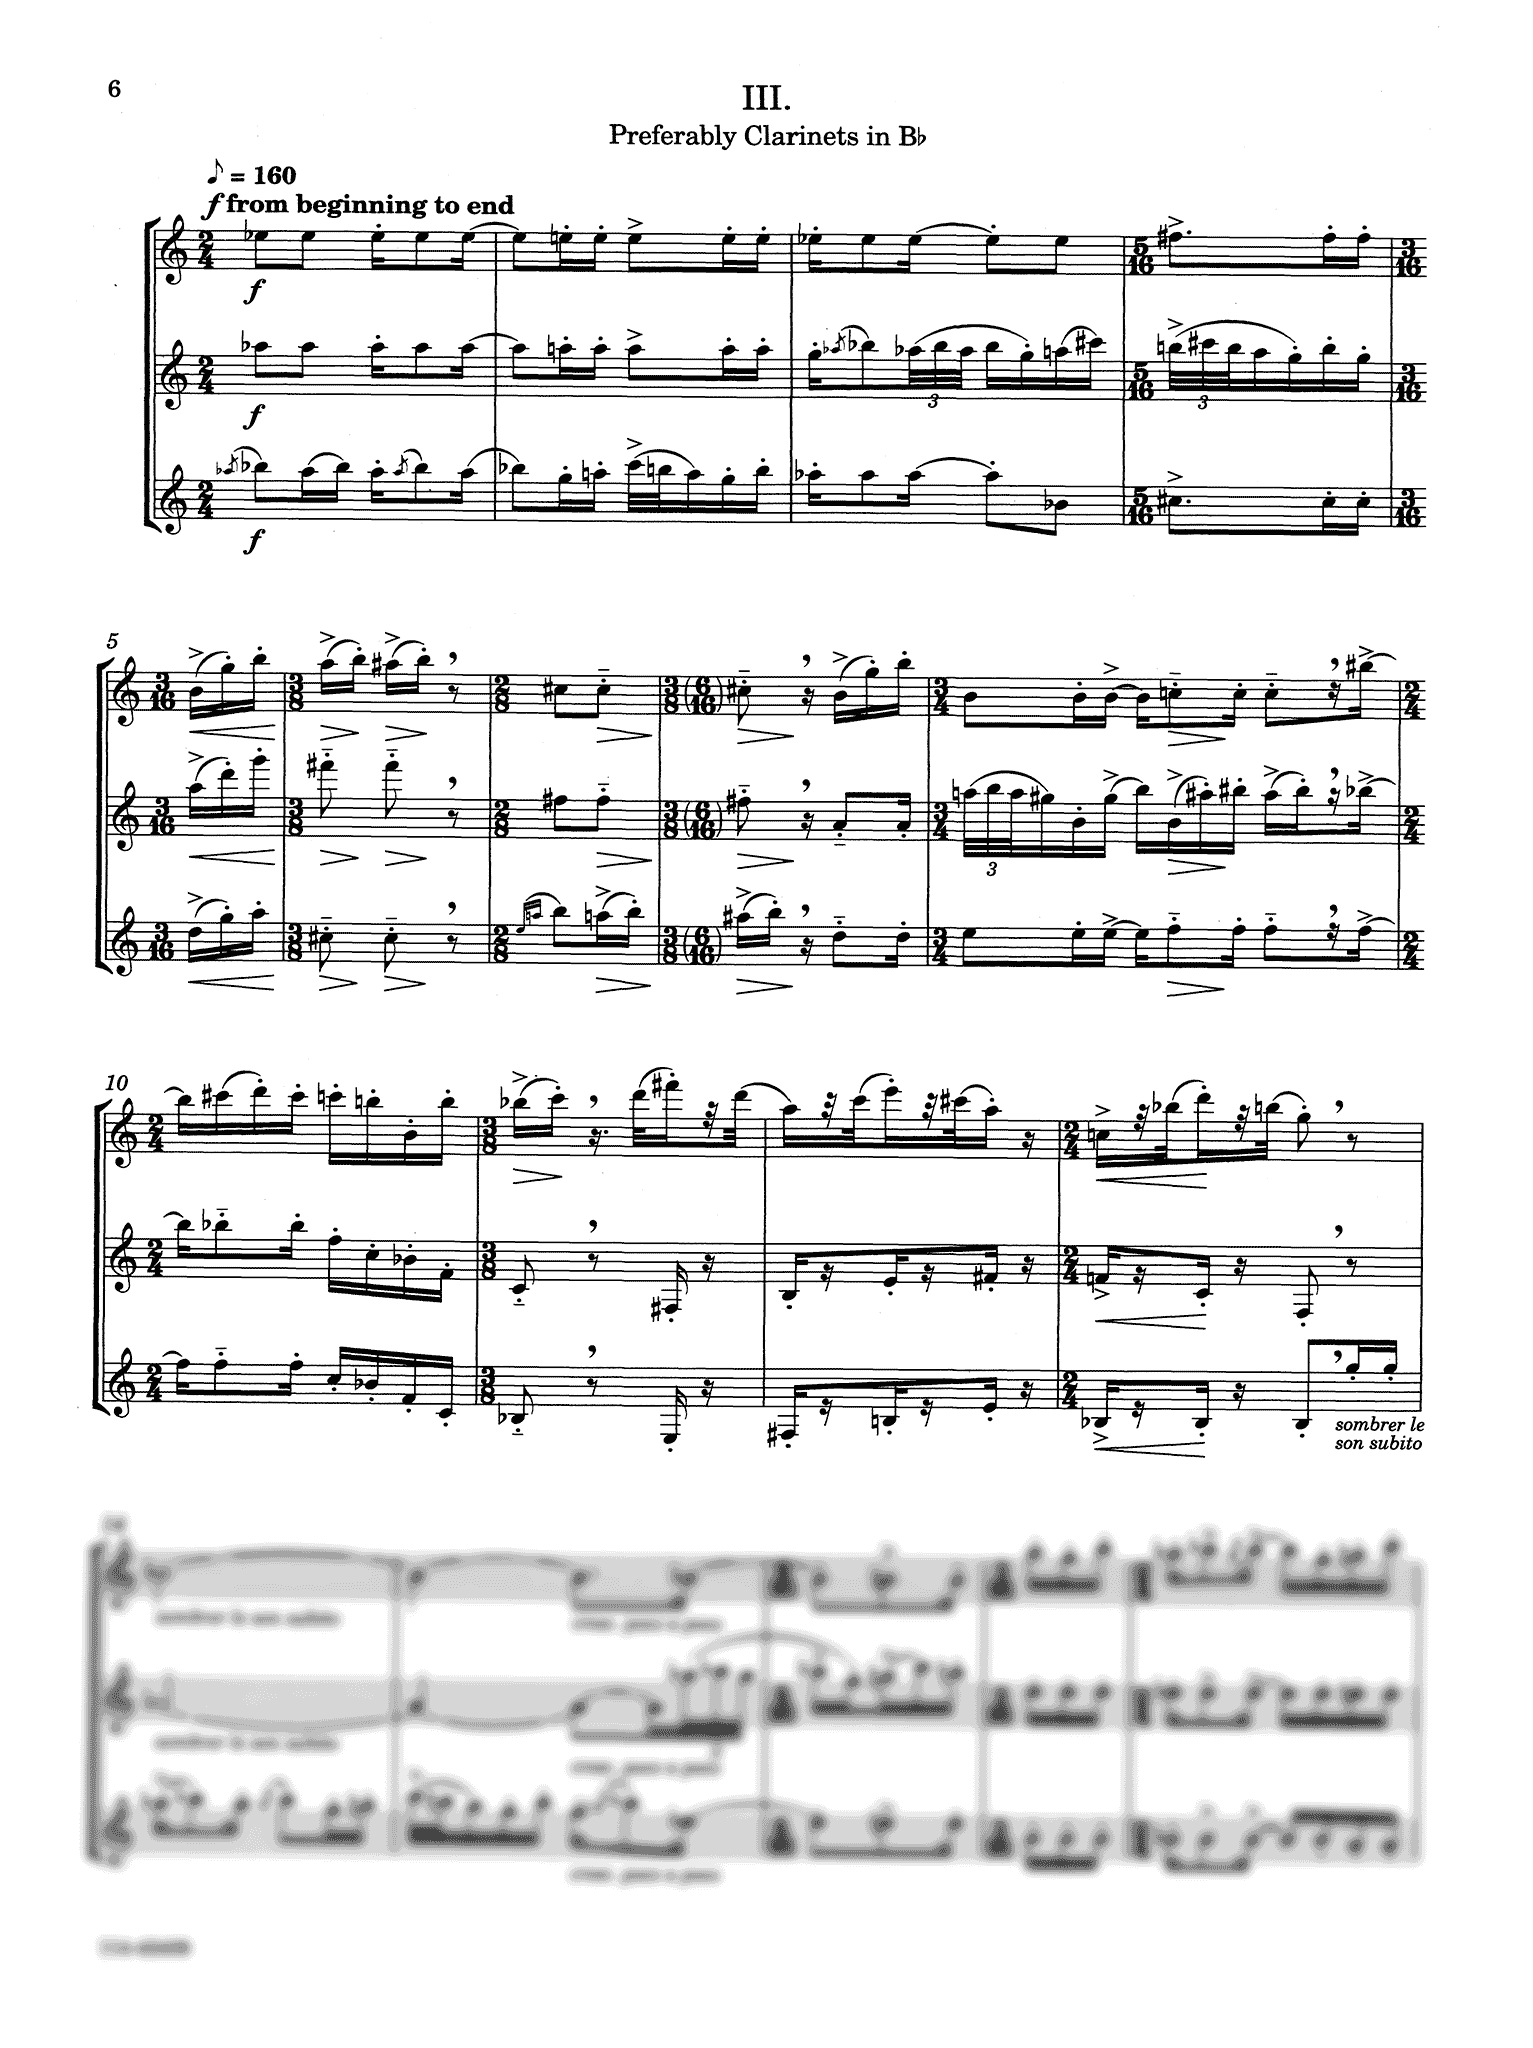 Stravinsky Three Pieces arranged for 3 Clarinets Barrett - Movement 3